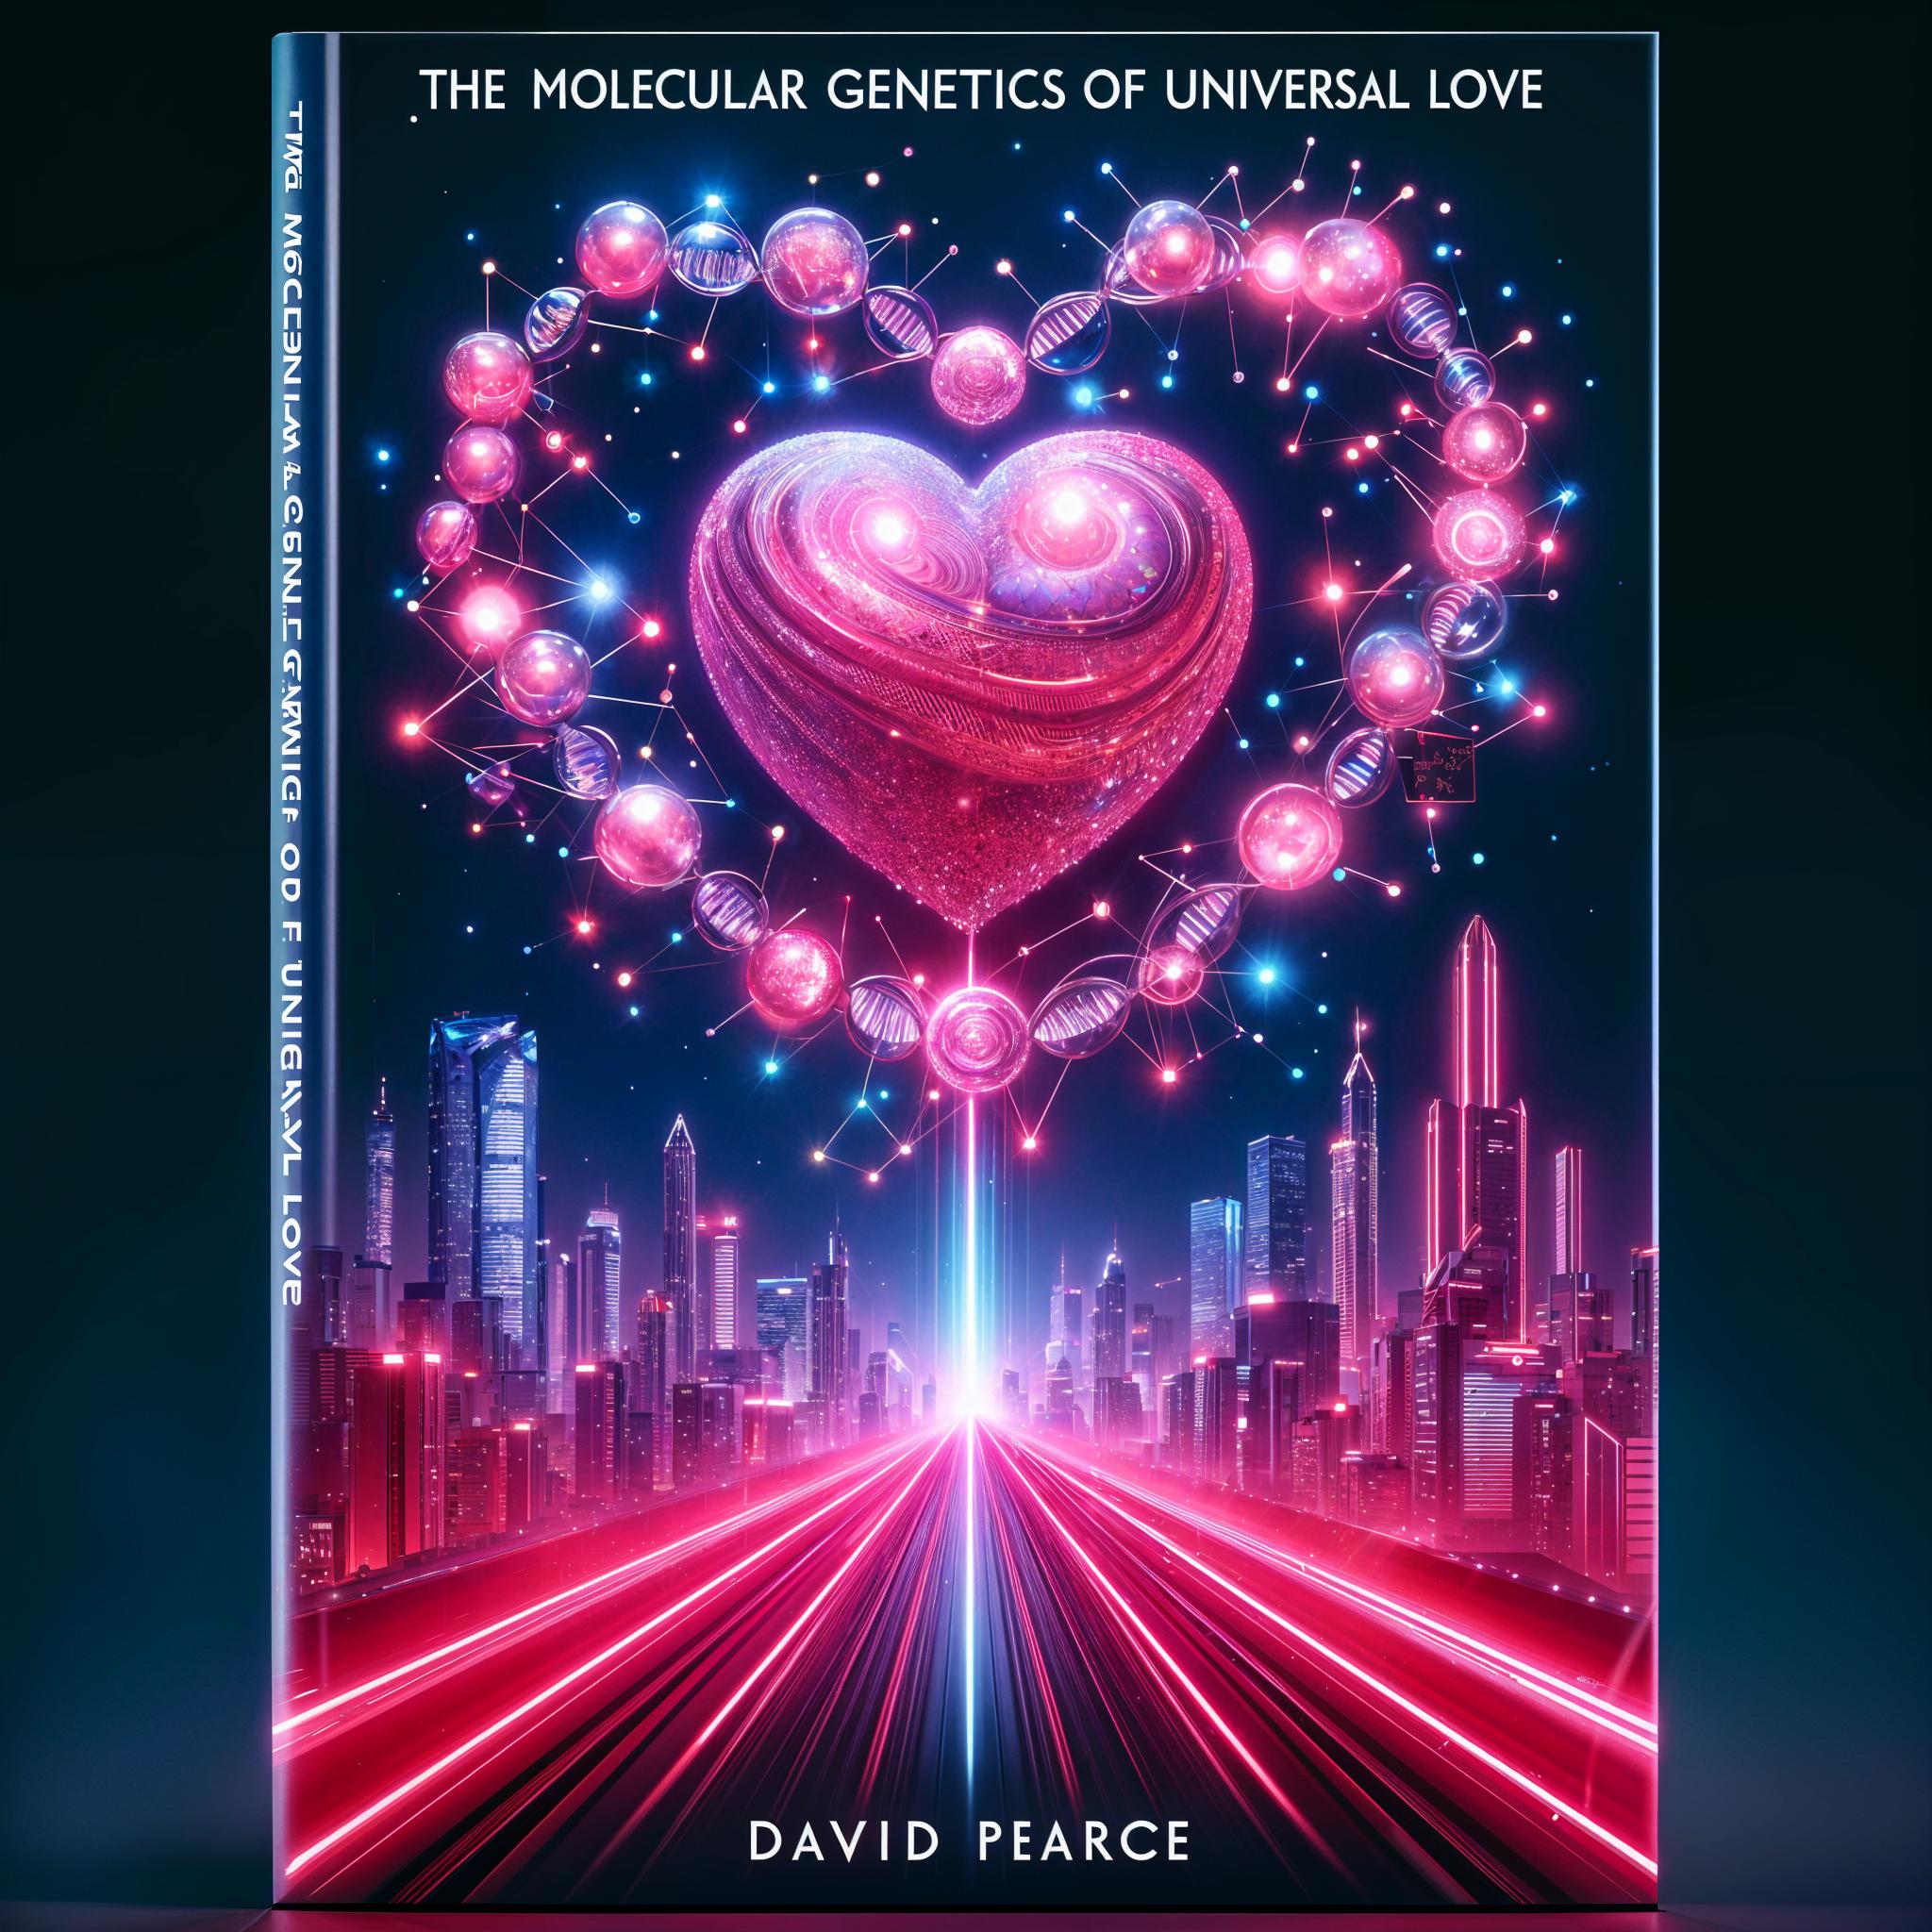 The Molecular Genetics of Universal Love by David Pearce